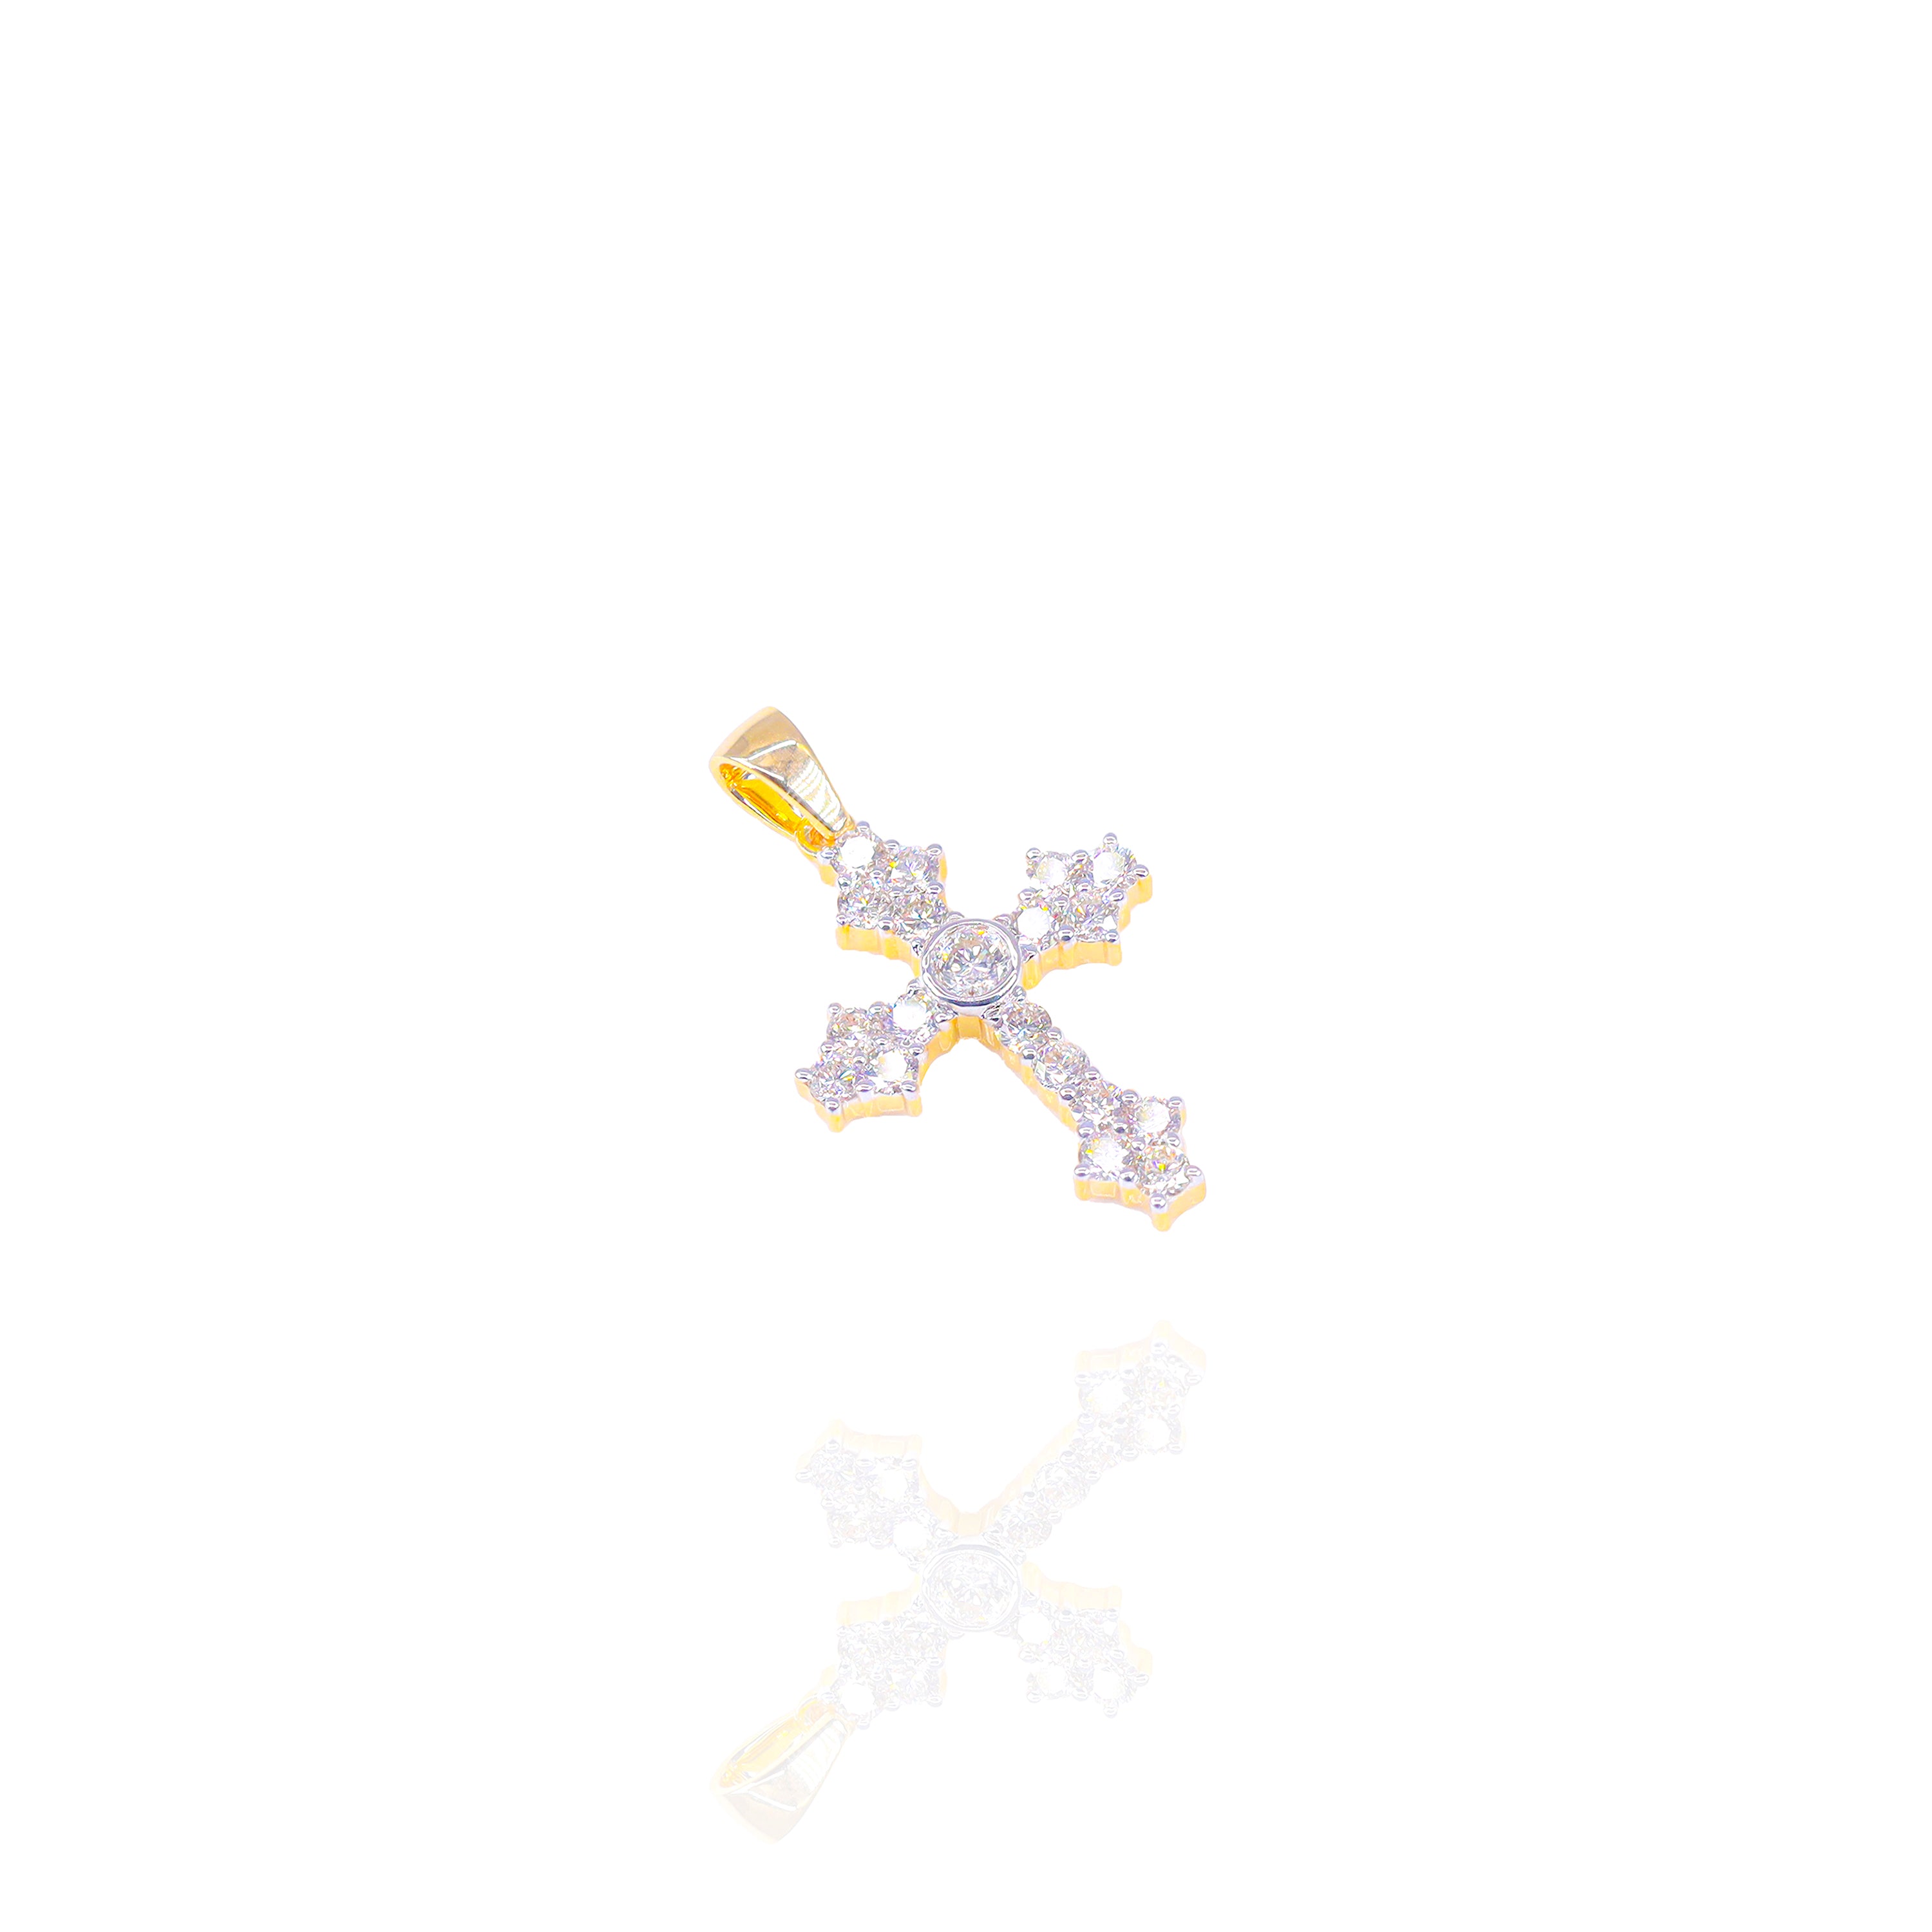 Small Cross with Center Stone Diamond Pendant